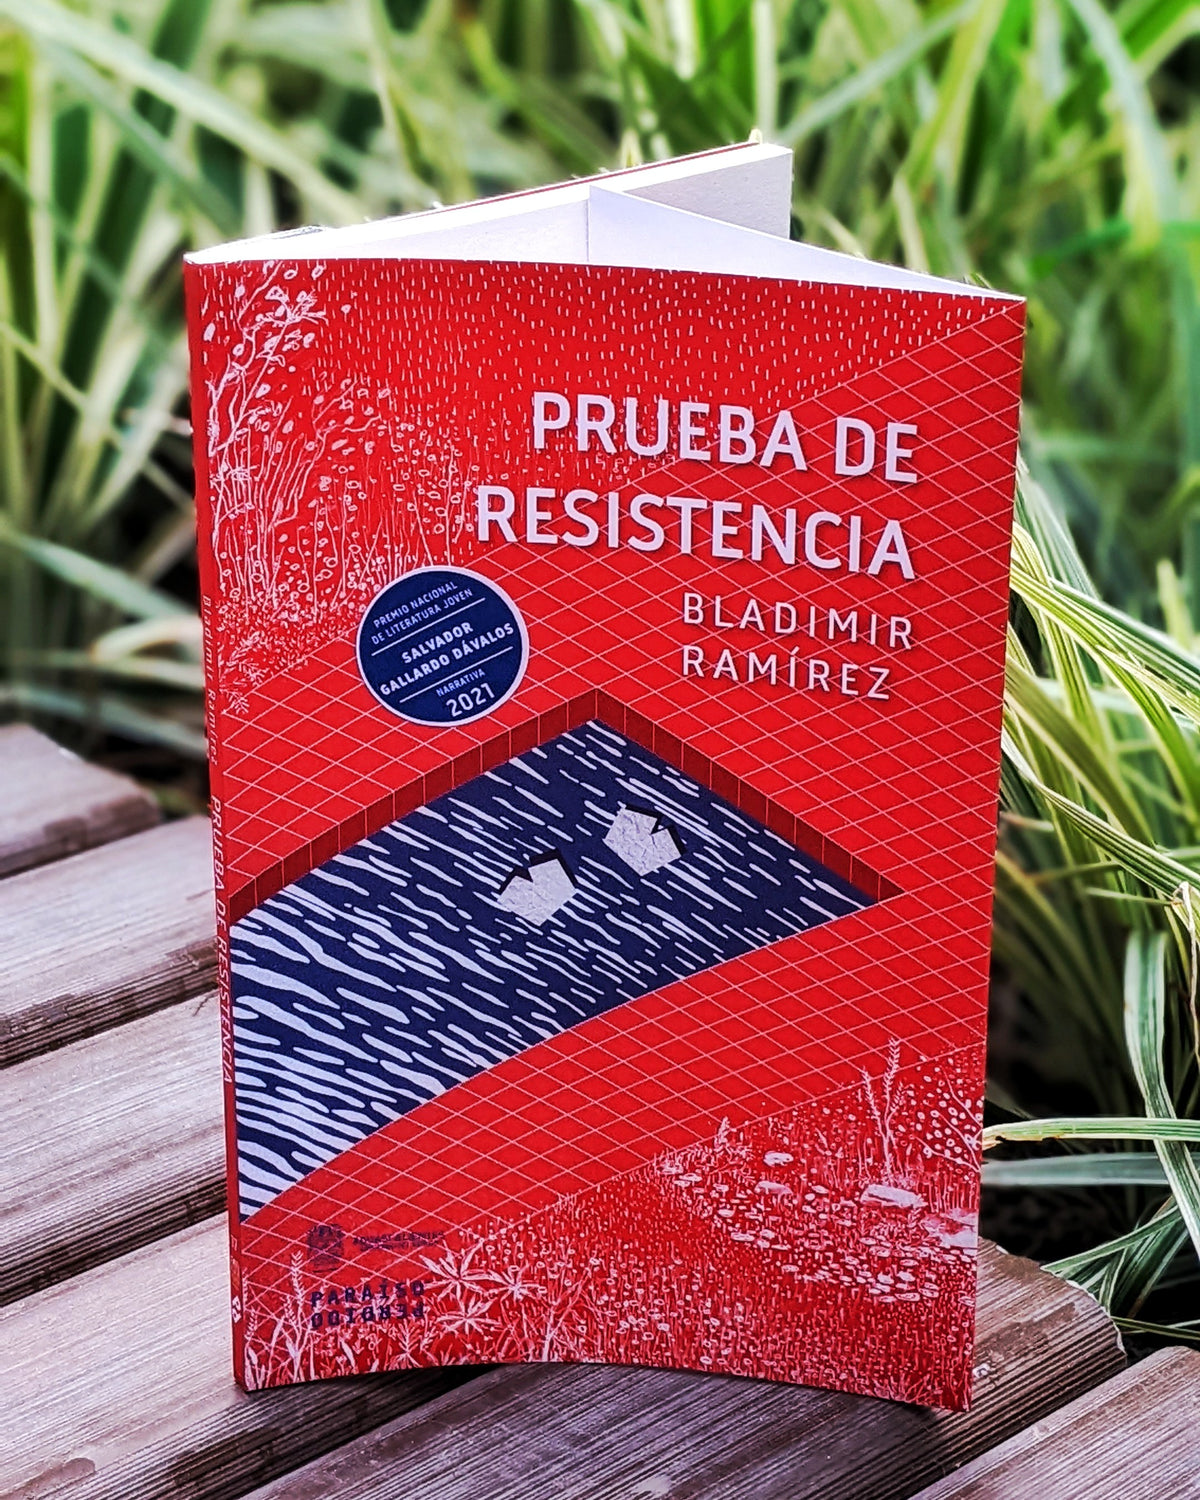 Prueba de resistencia | Bladimir Ramírez